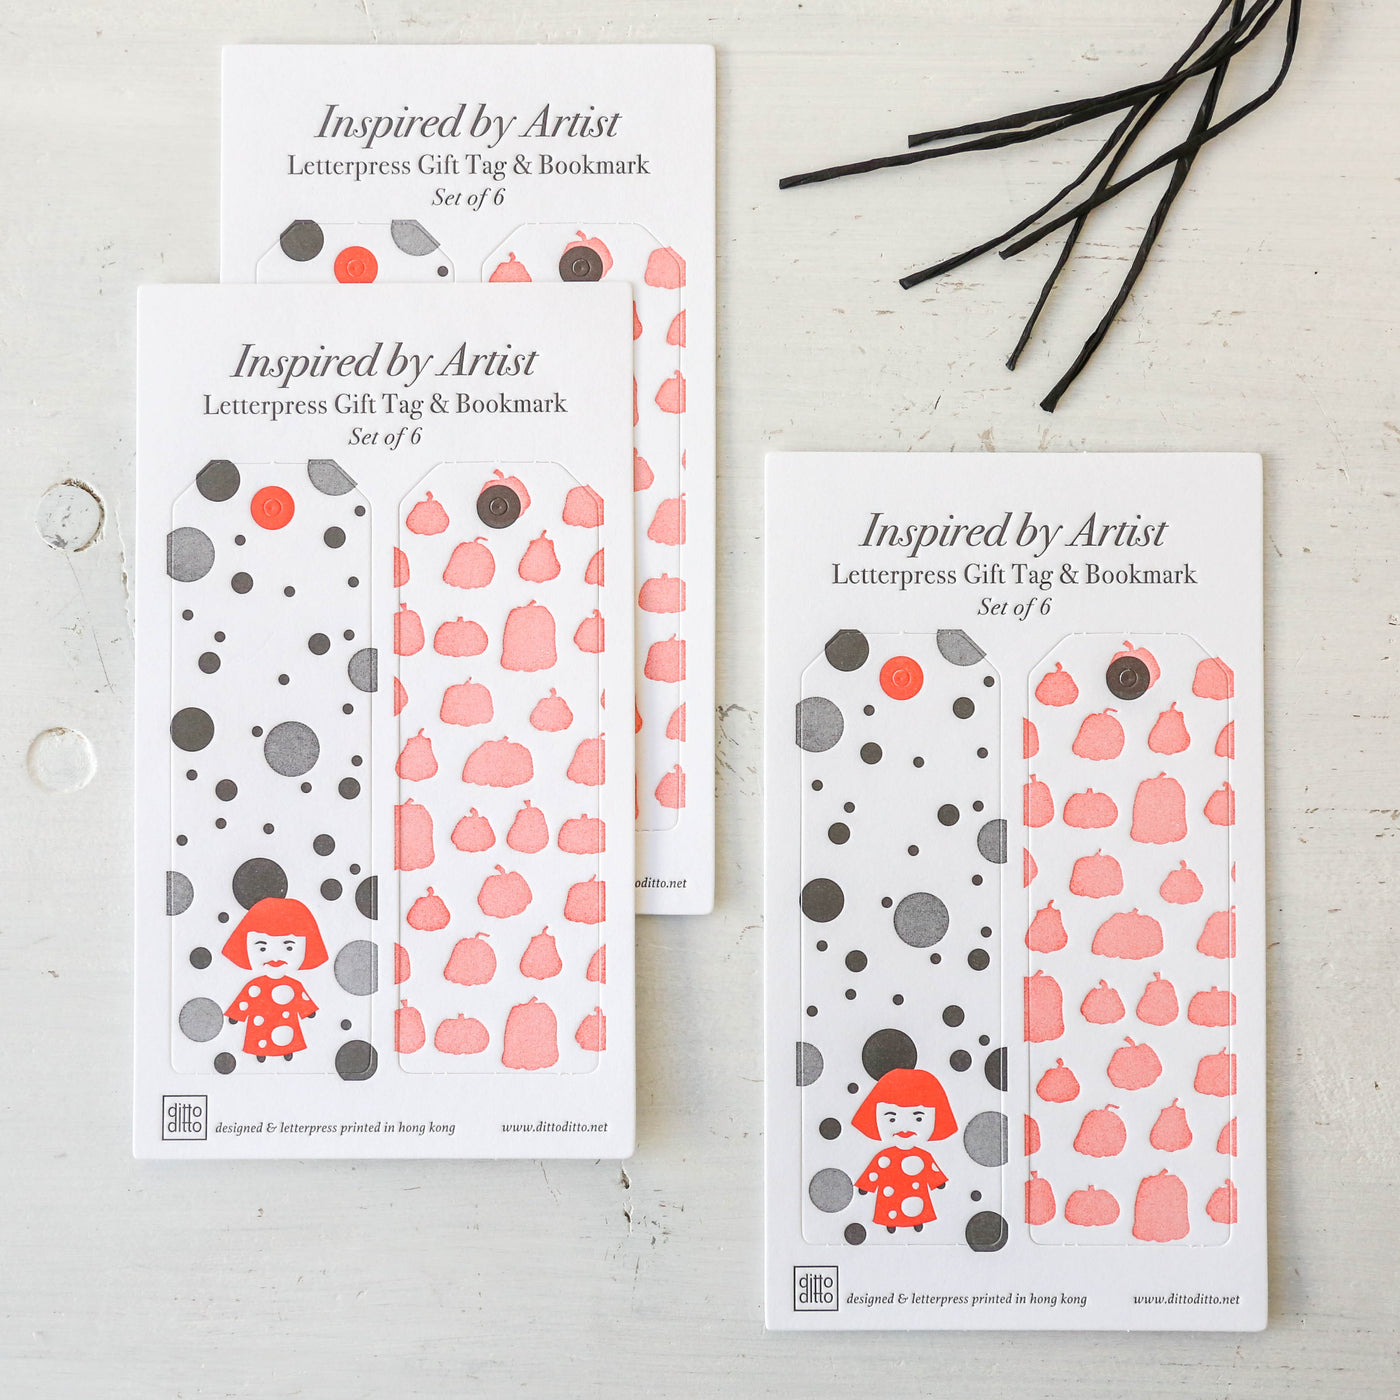 Artist Inspired Letterpress Bookmark Gift Tags - Set of 2